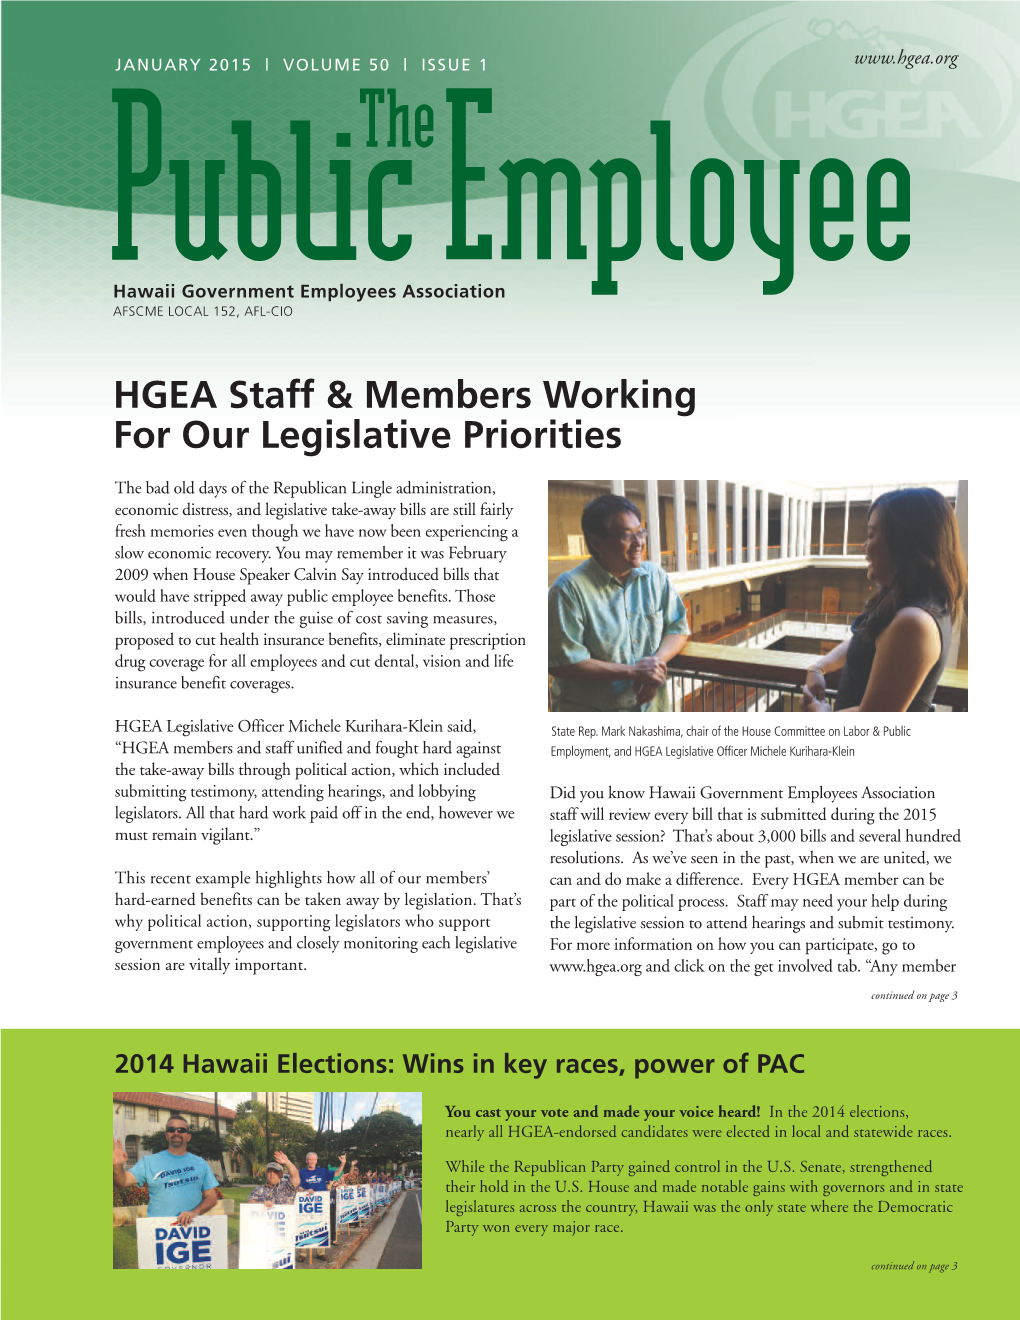 HGEA Staff & Members Working for Our Legislative Priorities